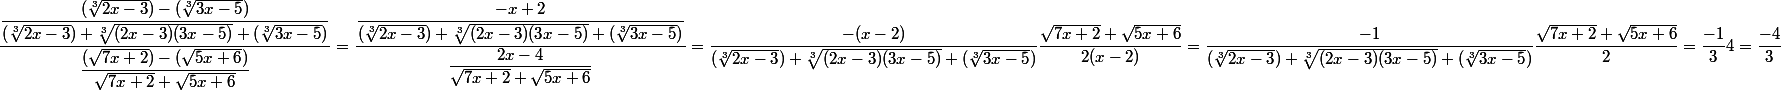 \dfrac{\dfrac{(\sqrt[3]{2x-3})-(\sqrt[3]{3x-5})}{(\sqrt[3]{2x-3})+\sqrt[3]{(2x-3)(3x-5)}+(\sqrt[3]{3x-5})}}{\dfrac{(\sqrt{7x+2})-(\sqrt{5x+6})}{\sqrt{7x+2}+\sqrt{5x+6}}}=\dfrac{\dfrac{-x+2}{(\sqrt[3]{2x-3})+\sqrt[3]{(2x-3)(3x-5)}+(\sqrt[3]{3x-5})}}{\dfrac{2x-4}{\sqrt{7x+2}+\sqrt{5x+6}}}=\dfrac{-(x-2)}{(\sqrt[3]{2x-3})+\sqrt[3]{(2x-3)(3x-5)}+(\sqrt[3]{3x-5})}\dfrac{\sqrt{7x+2}+\sqrt{5x+6}}{2(x-2)}=\dfrac{-1}{(\sqrt[3]{2x-3})+\sqrt[3]{(2x-3)(3x-5)}+(\sqrt[3]{3x-5})}\dfrac{\sqrt{7x+2}+\sqrt{5x+6}}{2}=\dfrac{-1}{3}4=\dfrac{-4}{3}